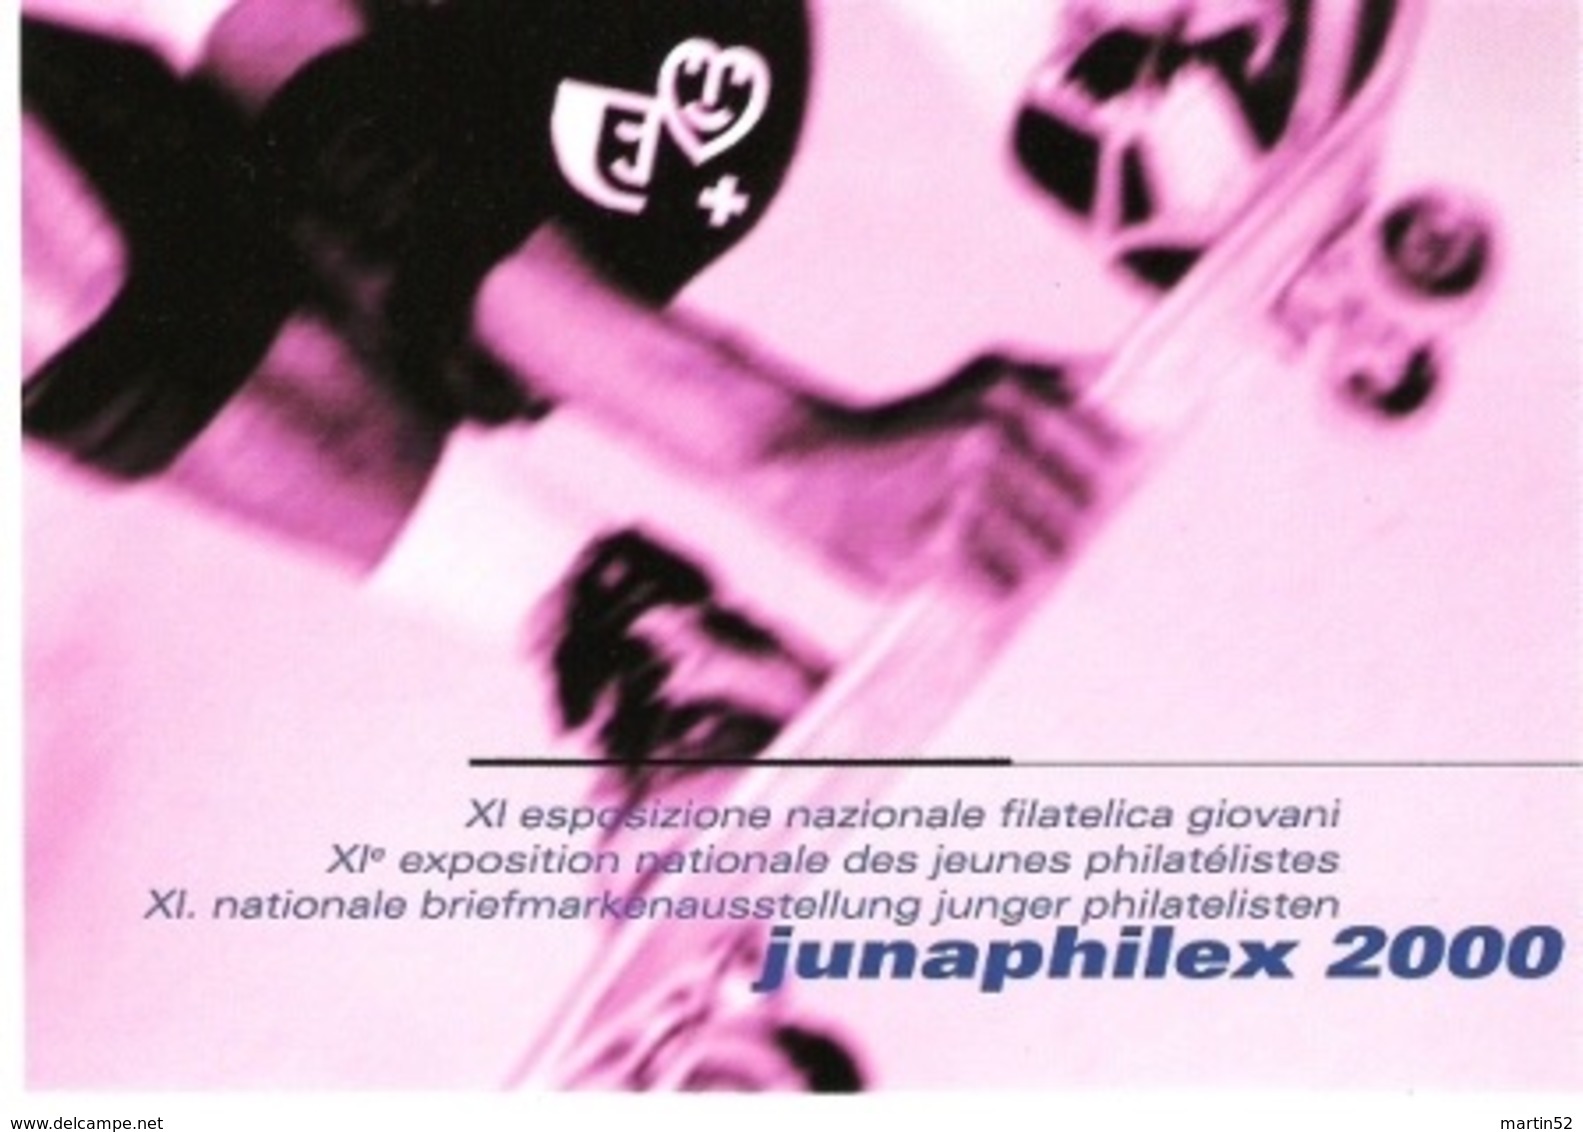 Schweiz Suisse 2000: Bild-PK CPI "junaphilex 2000" (Basketball & Skateboard) Mit ET-o BERN 21.6.2000 - Skateboard